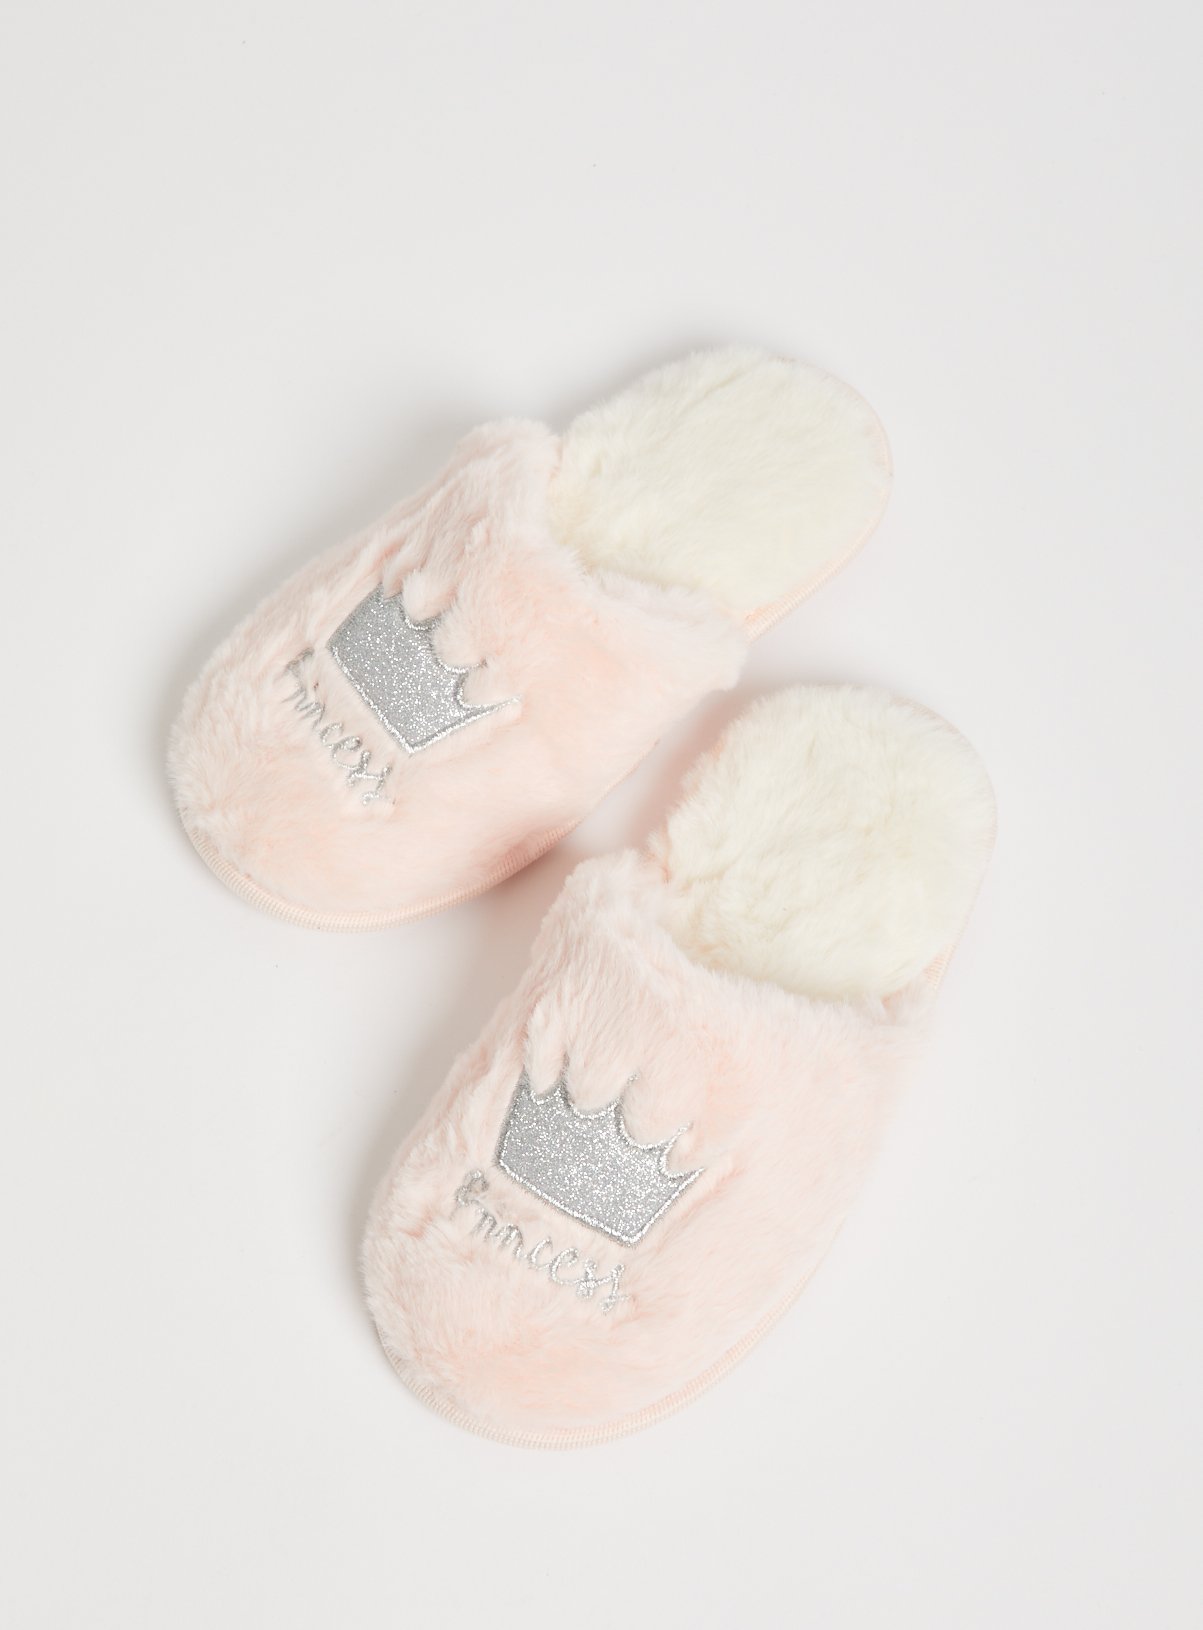 argos girls slippers